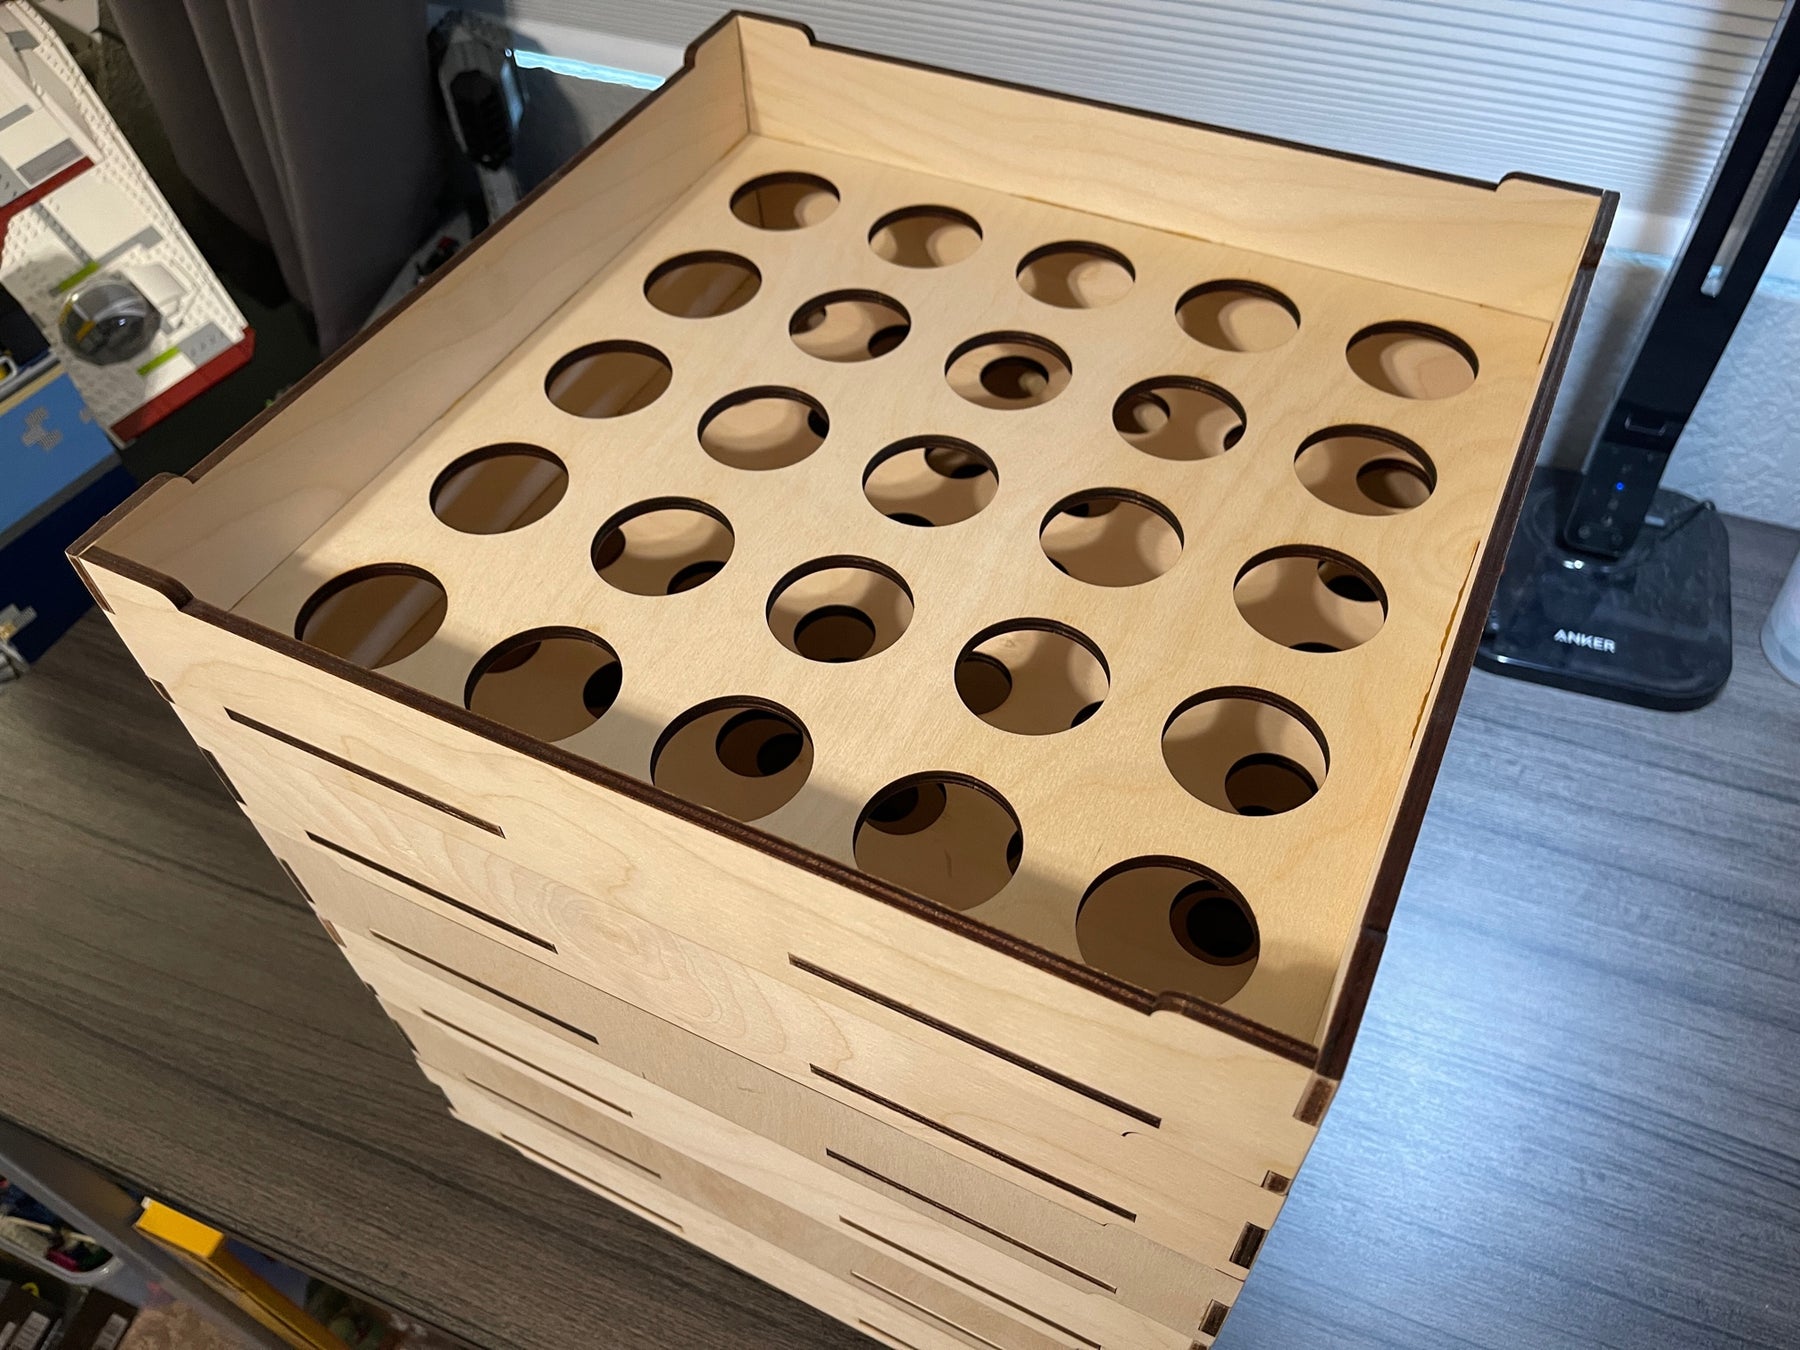 Laser Plans for 11 5-tray Brick Sorter 